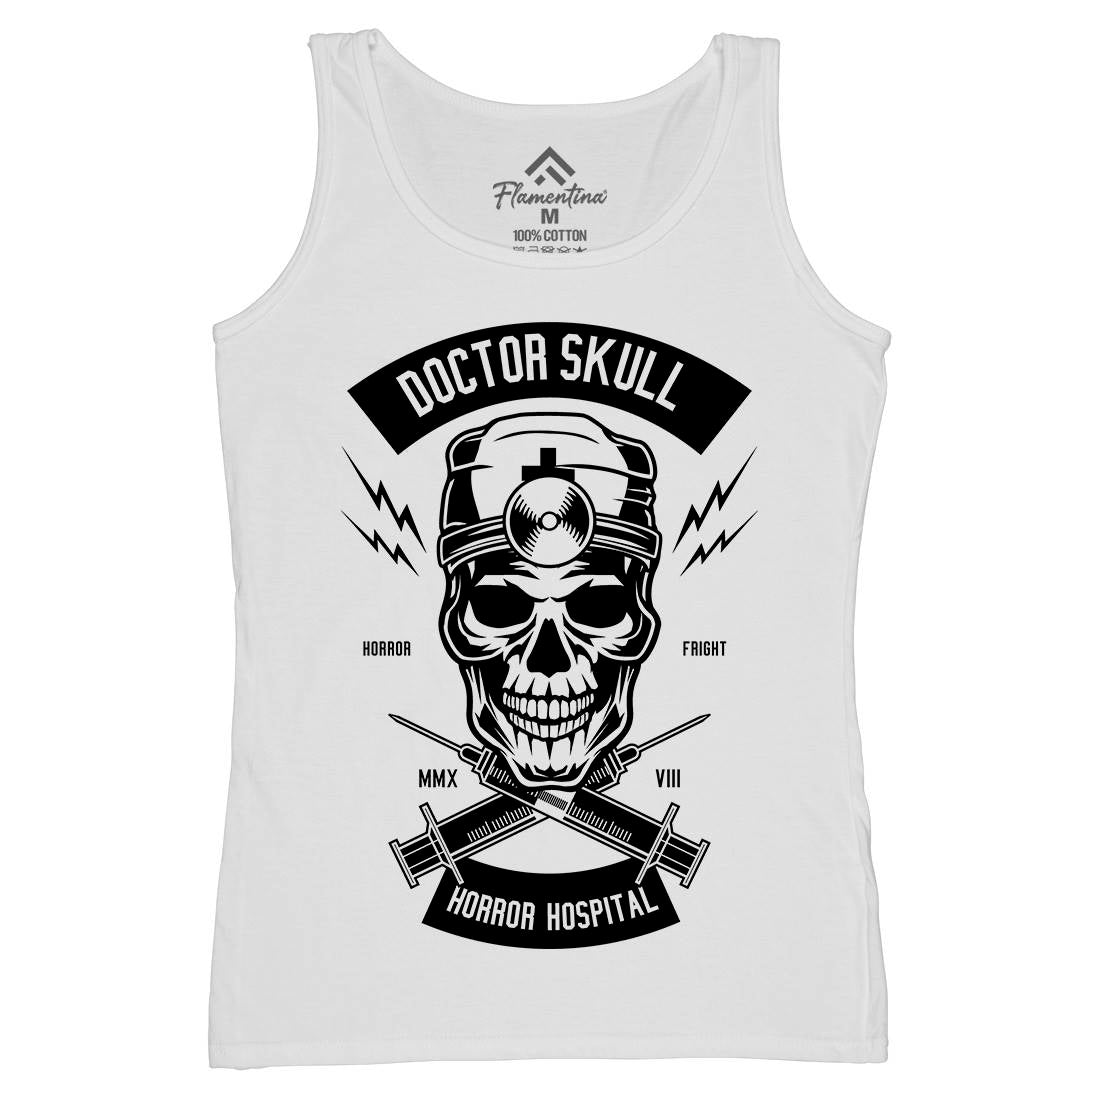 Doctor Skull Womens Organic Tank Top Vest Horror B533